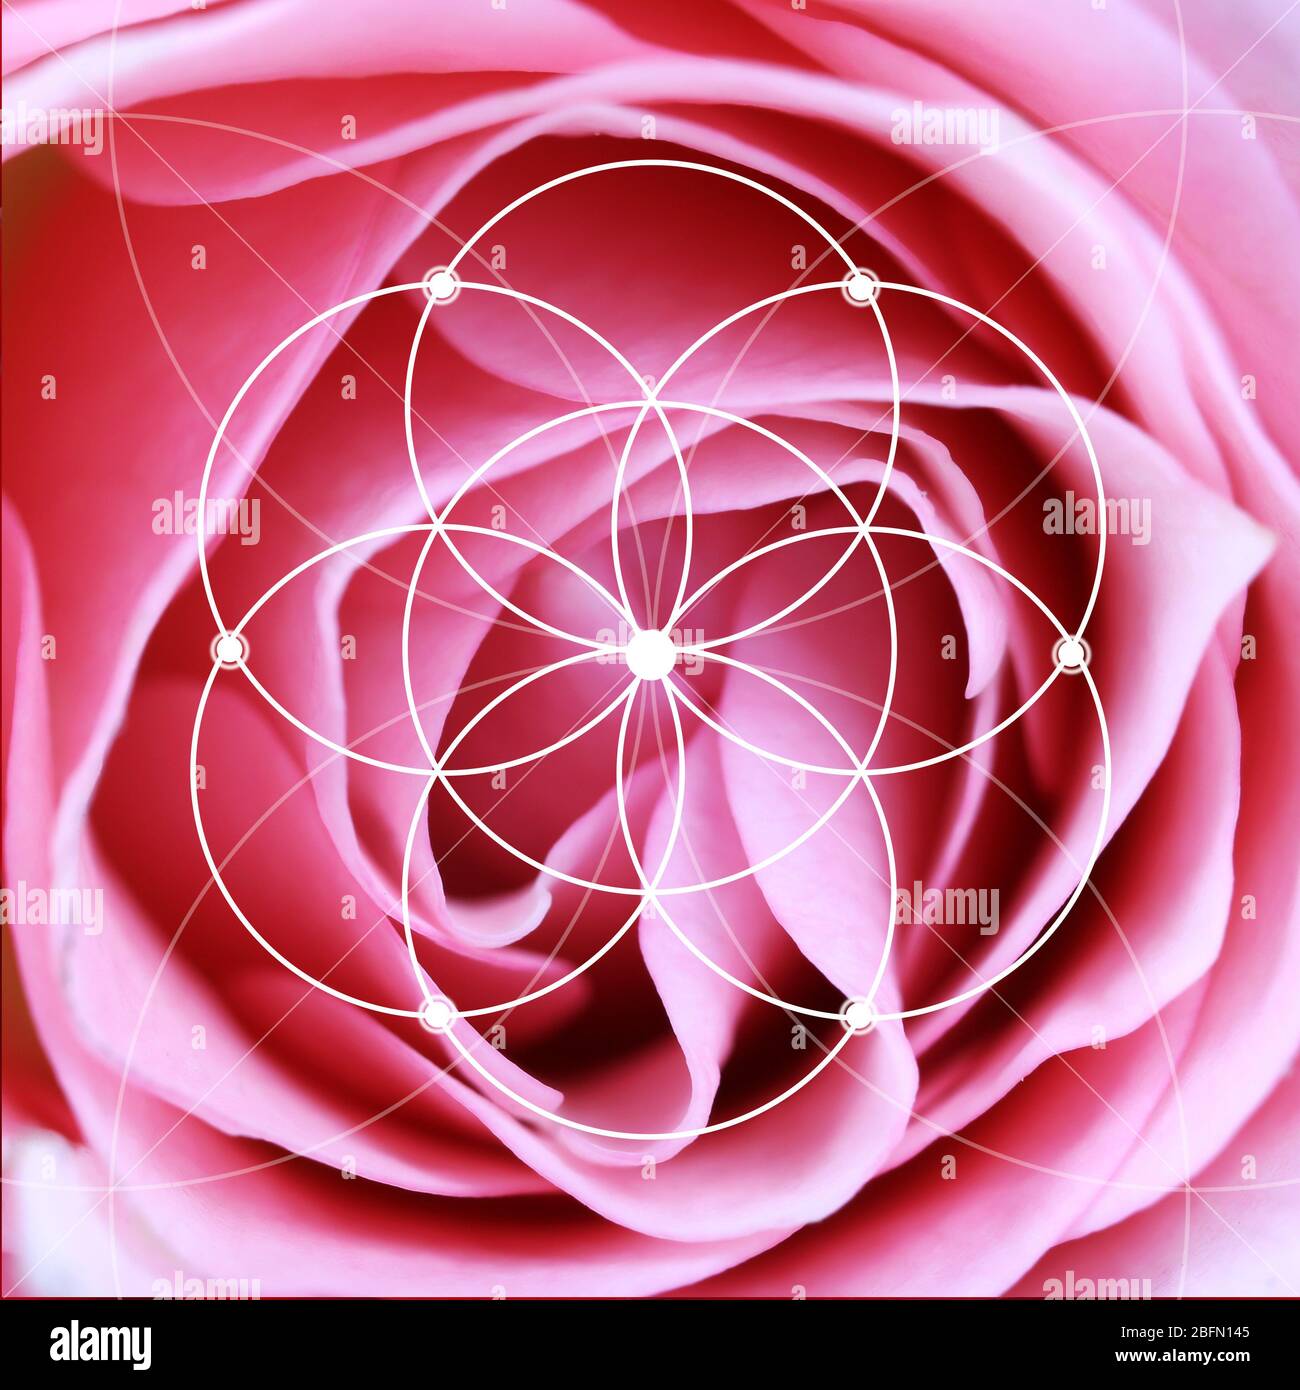 Fibonacci Rose High Resolution Stock Photography and Images - Alamy